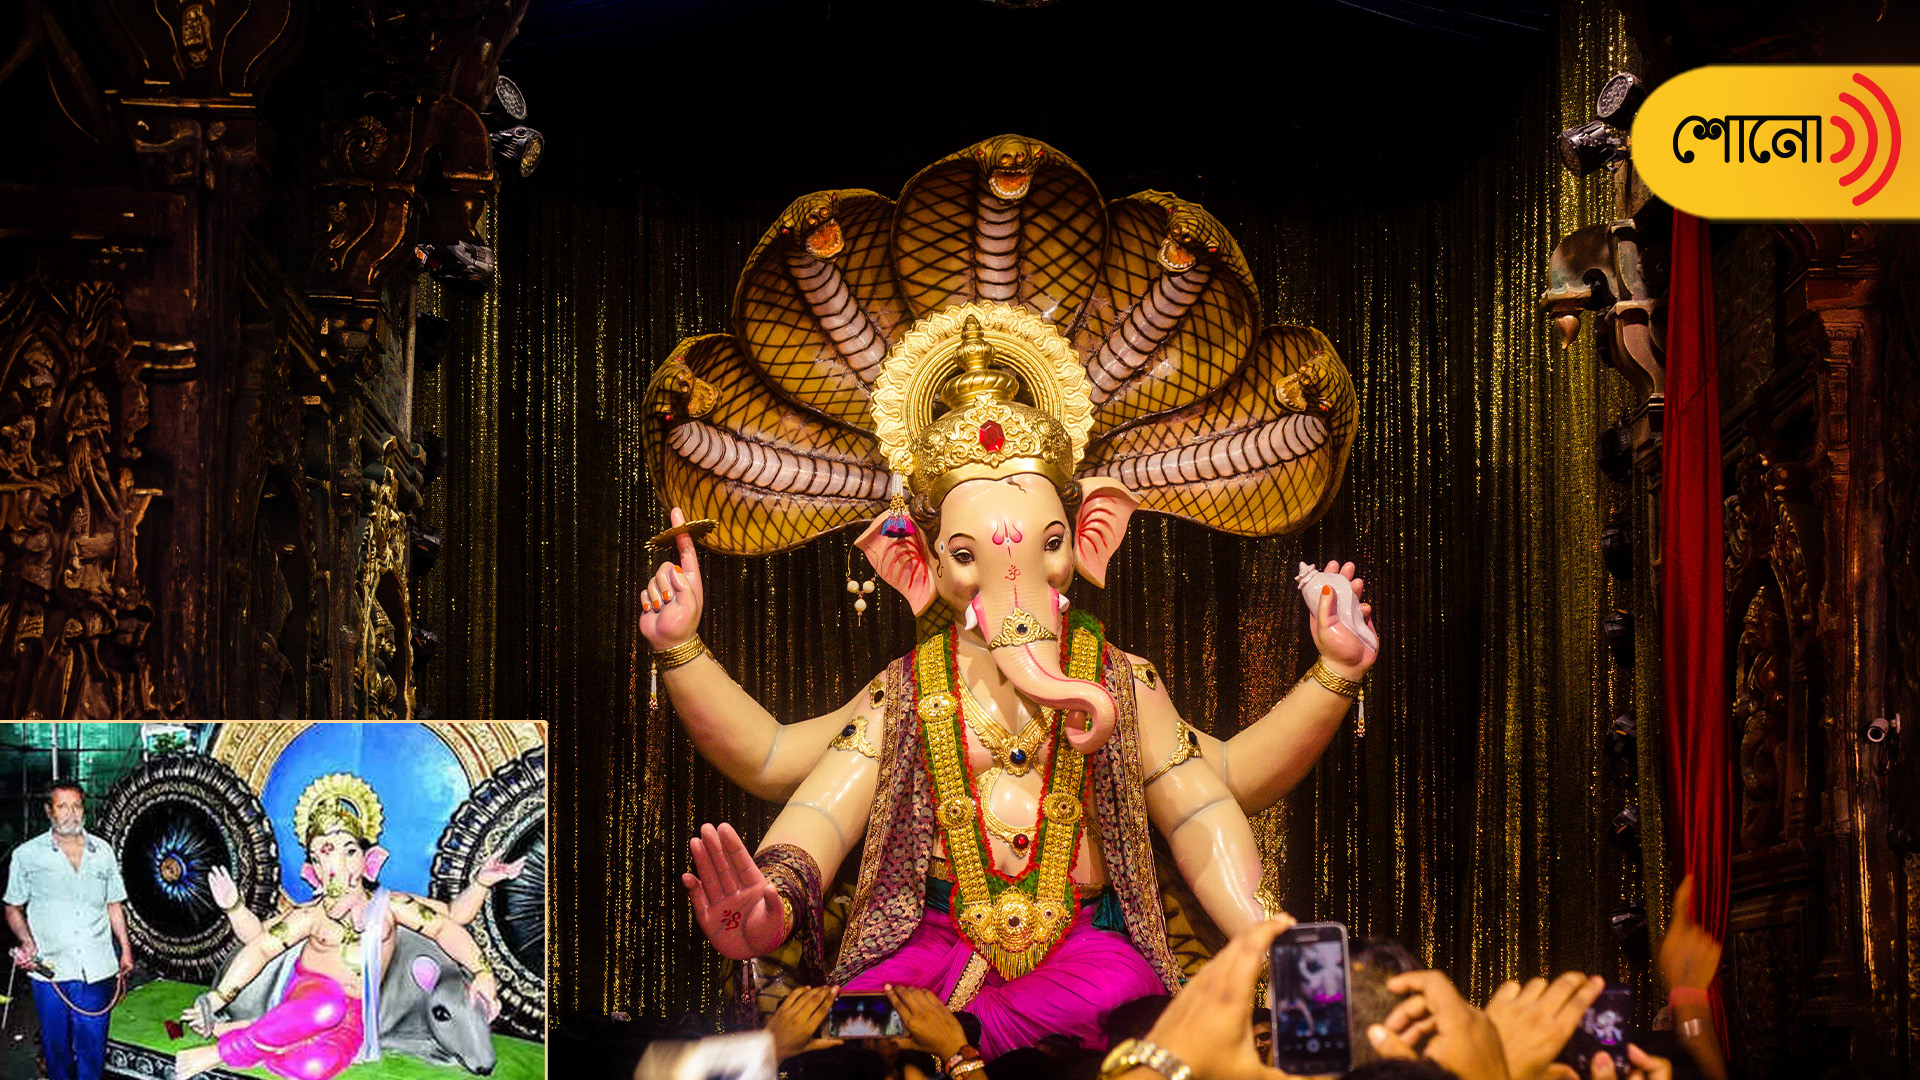 Muslim man who makes Ganesh idols becomes veg for 6 months